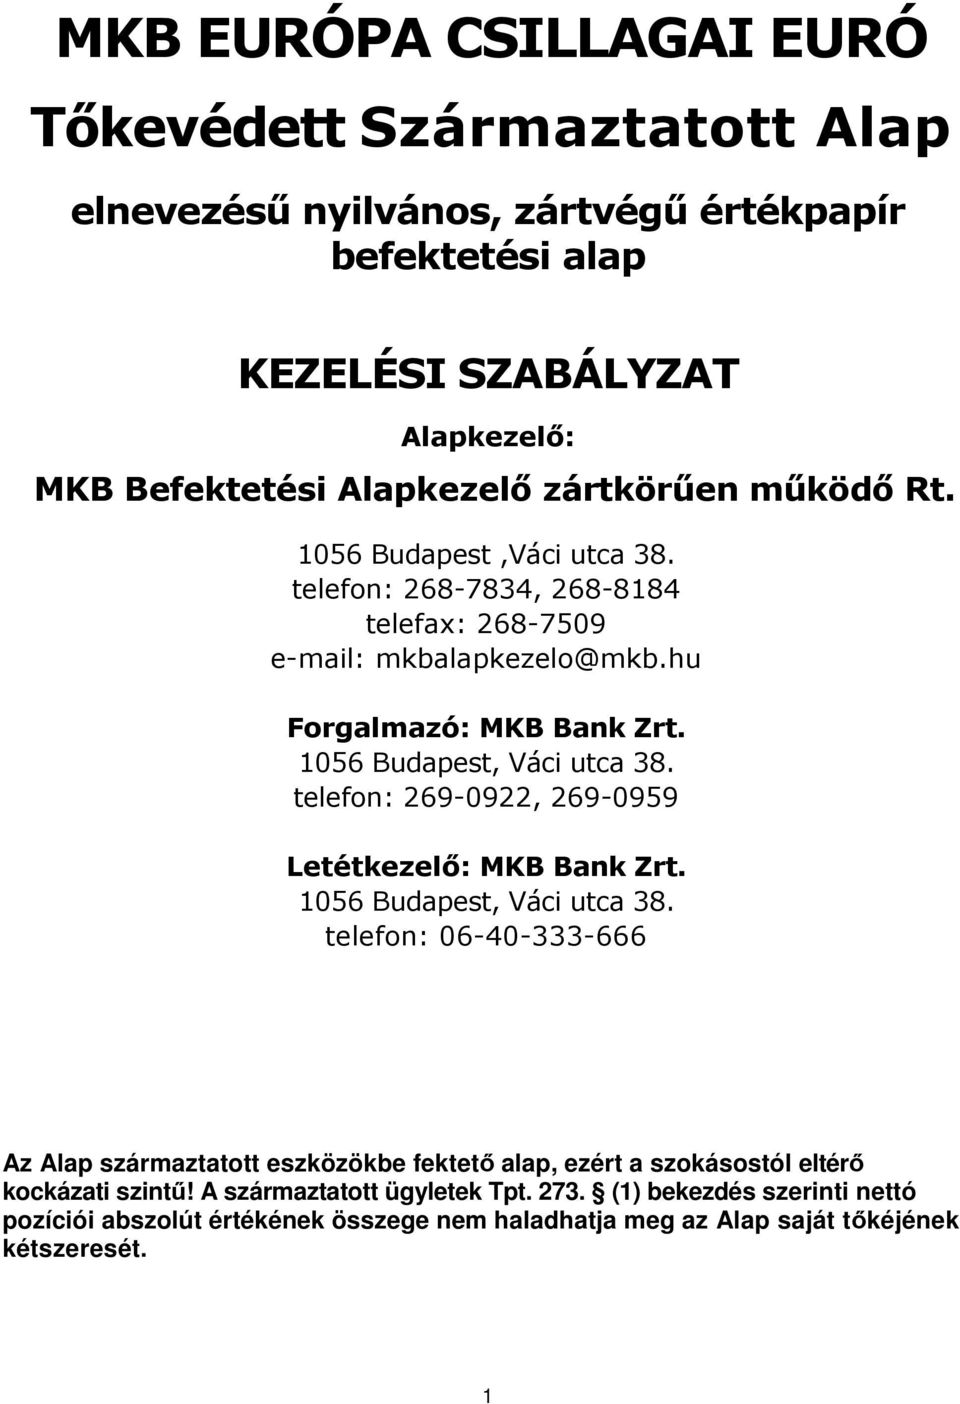 1056 Budapest, Váci utca 38. telefon: 269-0922, 269-0959 Letétkezelı: MKB Bank Zrt. 1056 Budapest, Váci utca 38.